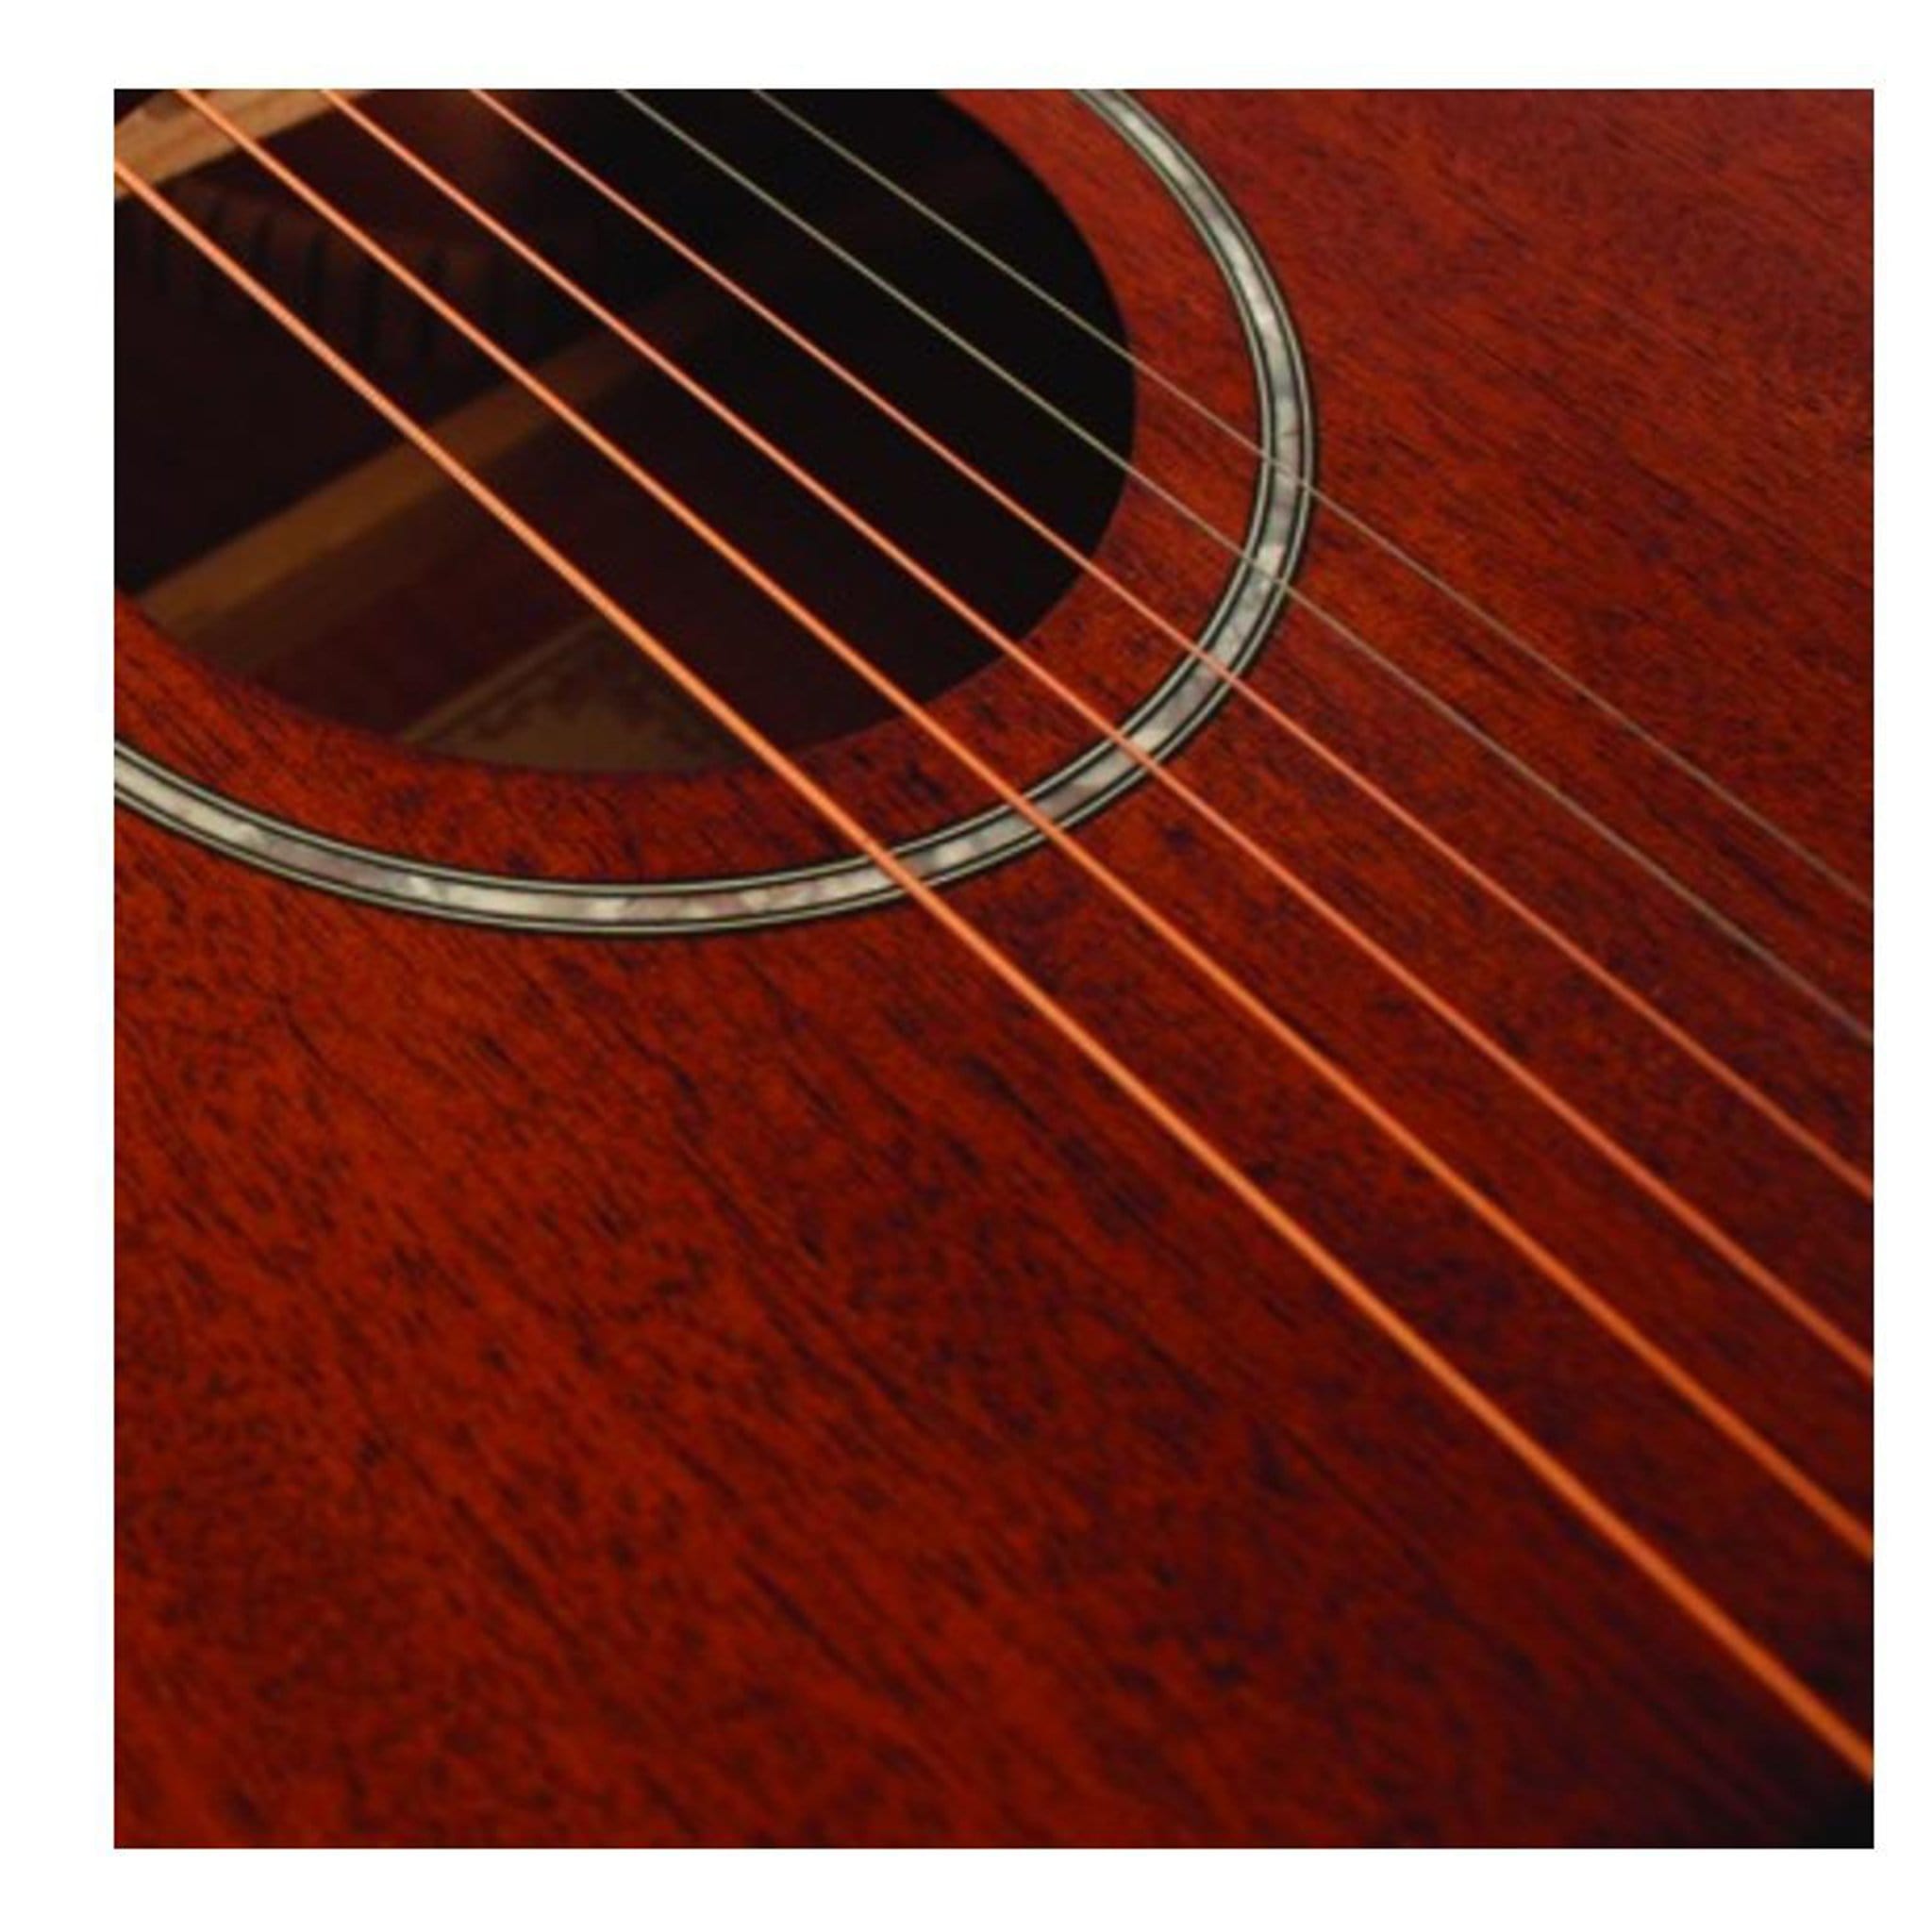 Cort SFX-MEM Semi Acoustic Electric Guitar - Guitar Village